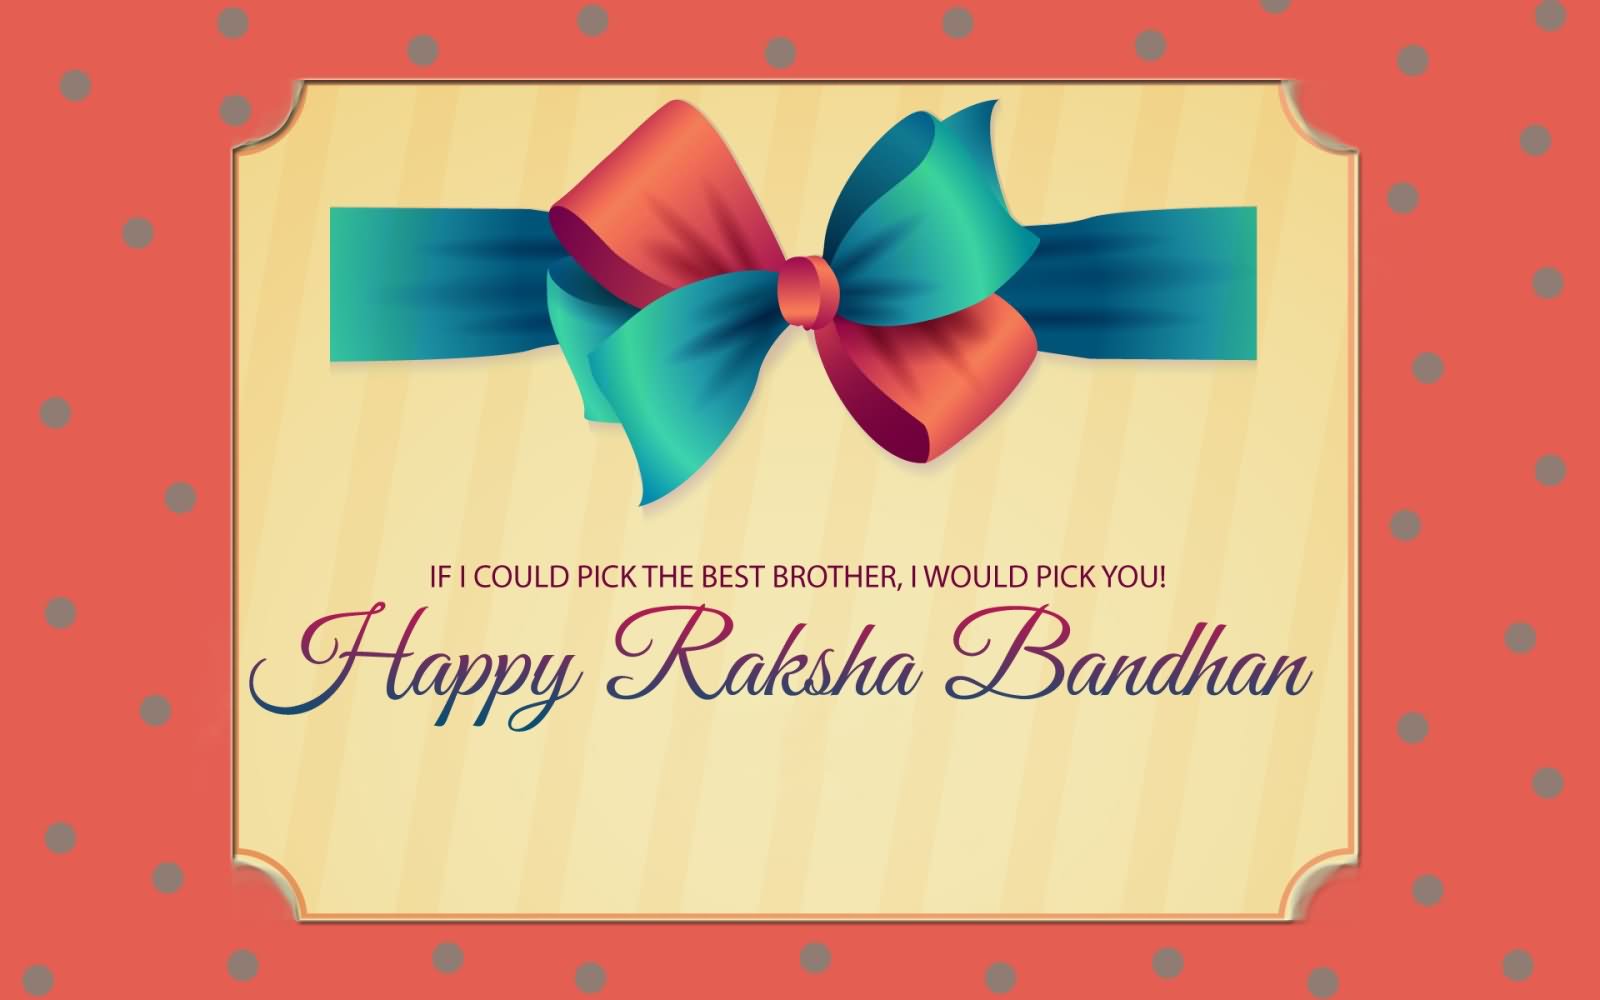 If I Could Pick The Best Brother, I Would Pick You Happy Raksha Bandhan